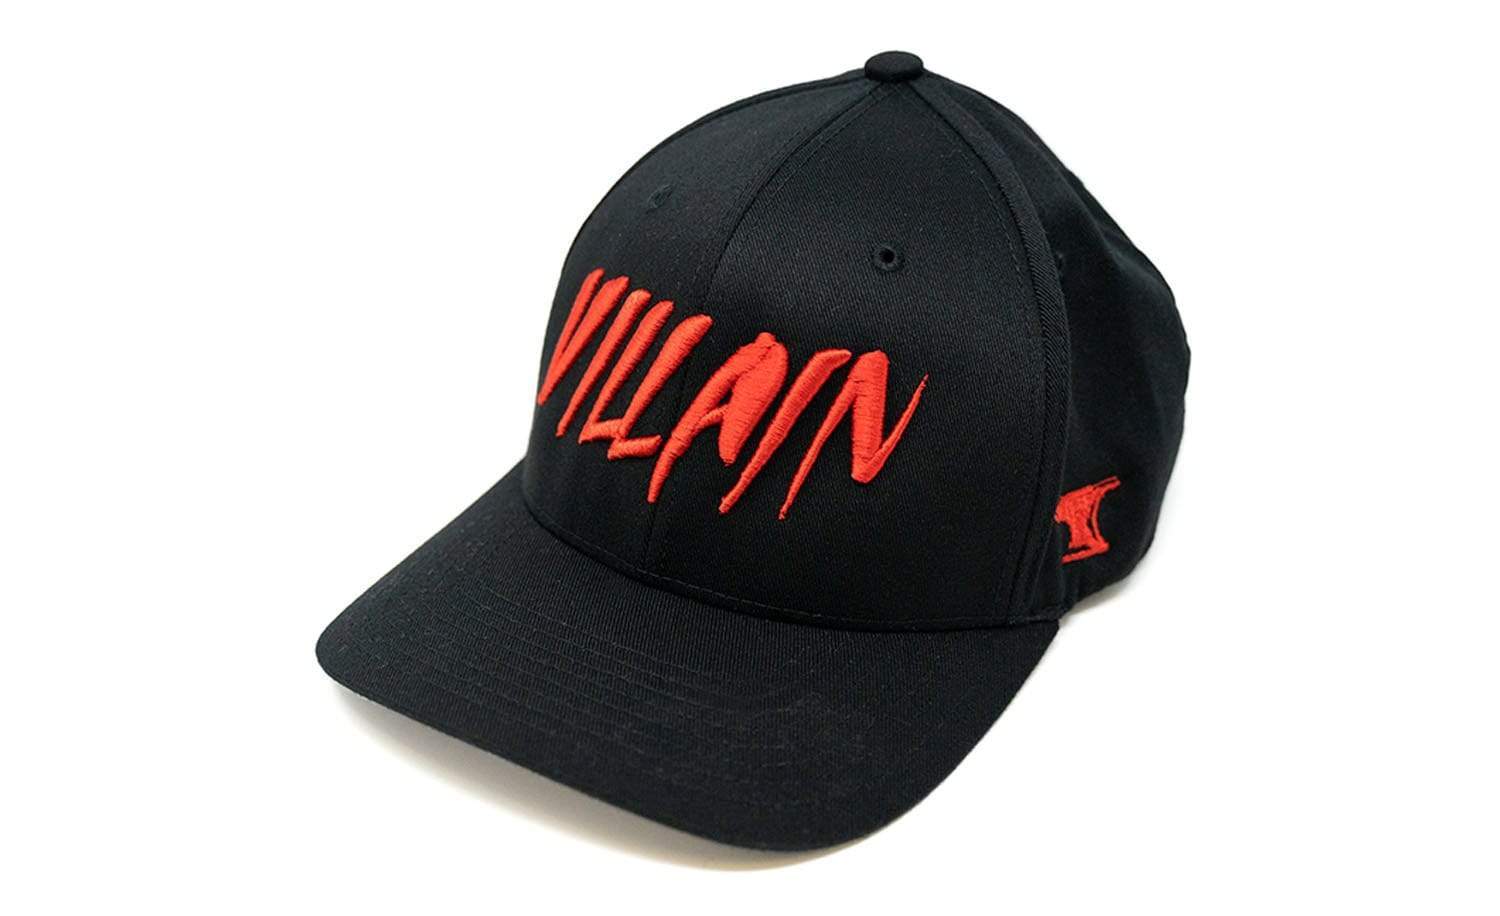 Villain Black Flexfit (Red) Hat